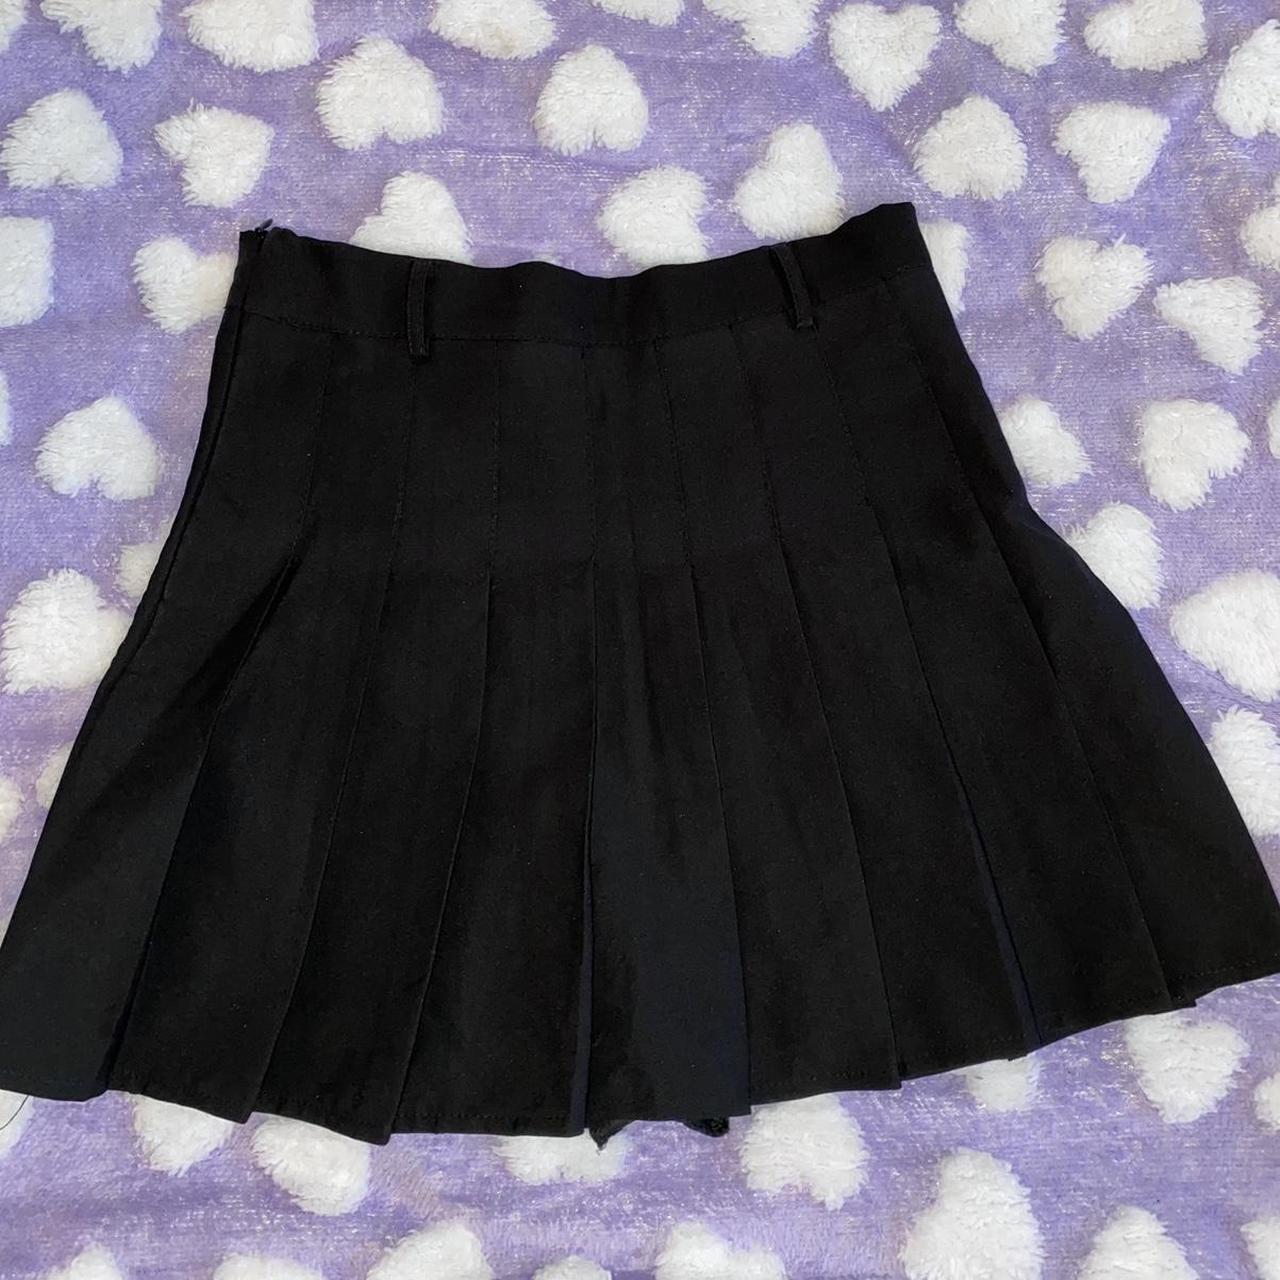 Black pleated skirt 🖤 Size medium, fits 8-10 Very... - Depop